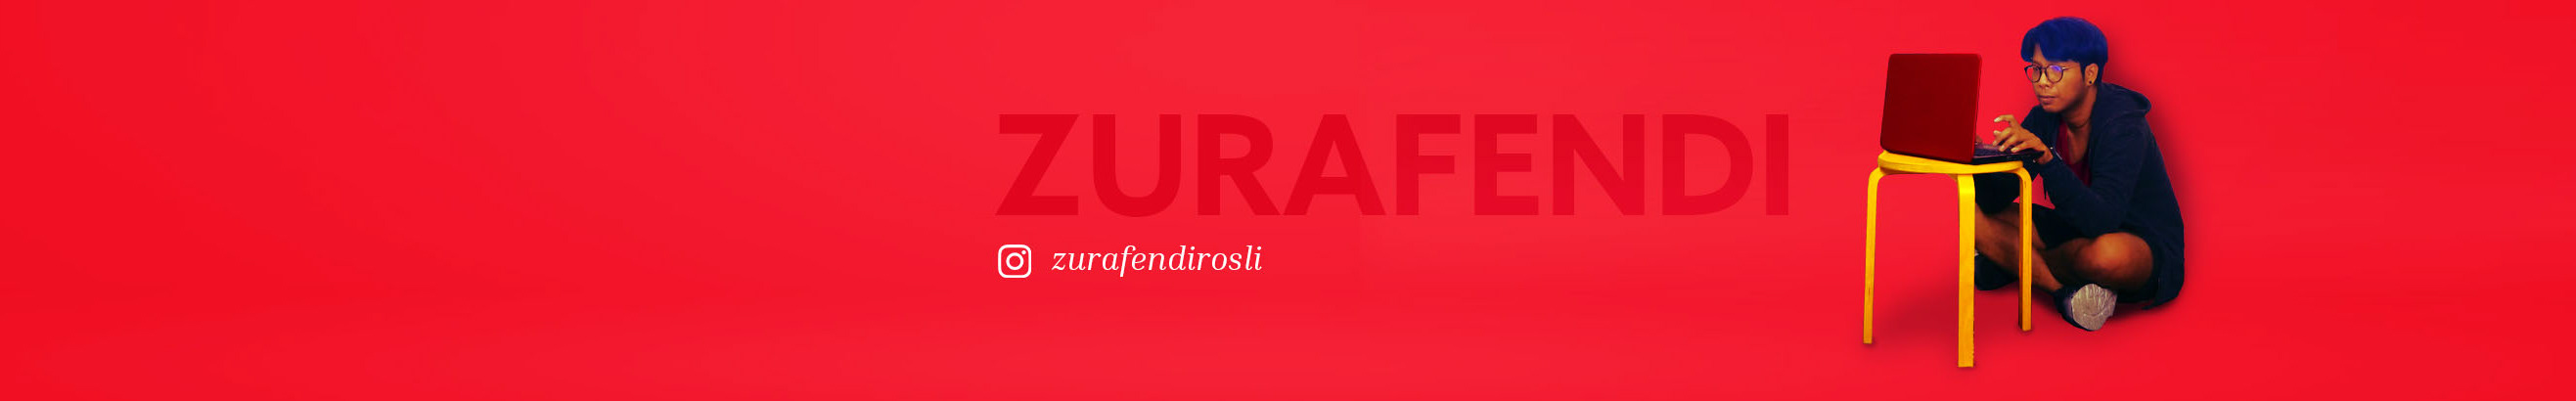 Zurafendi Rosli's profile banner